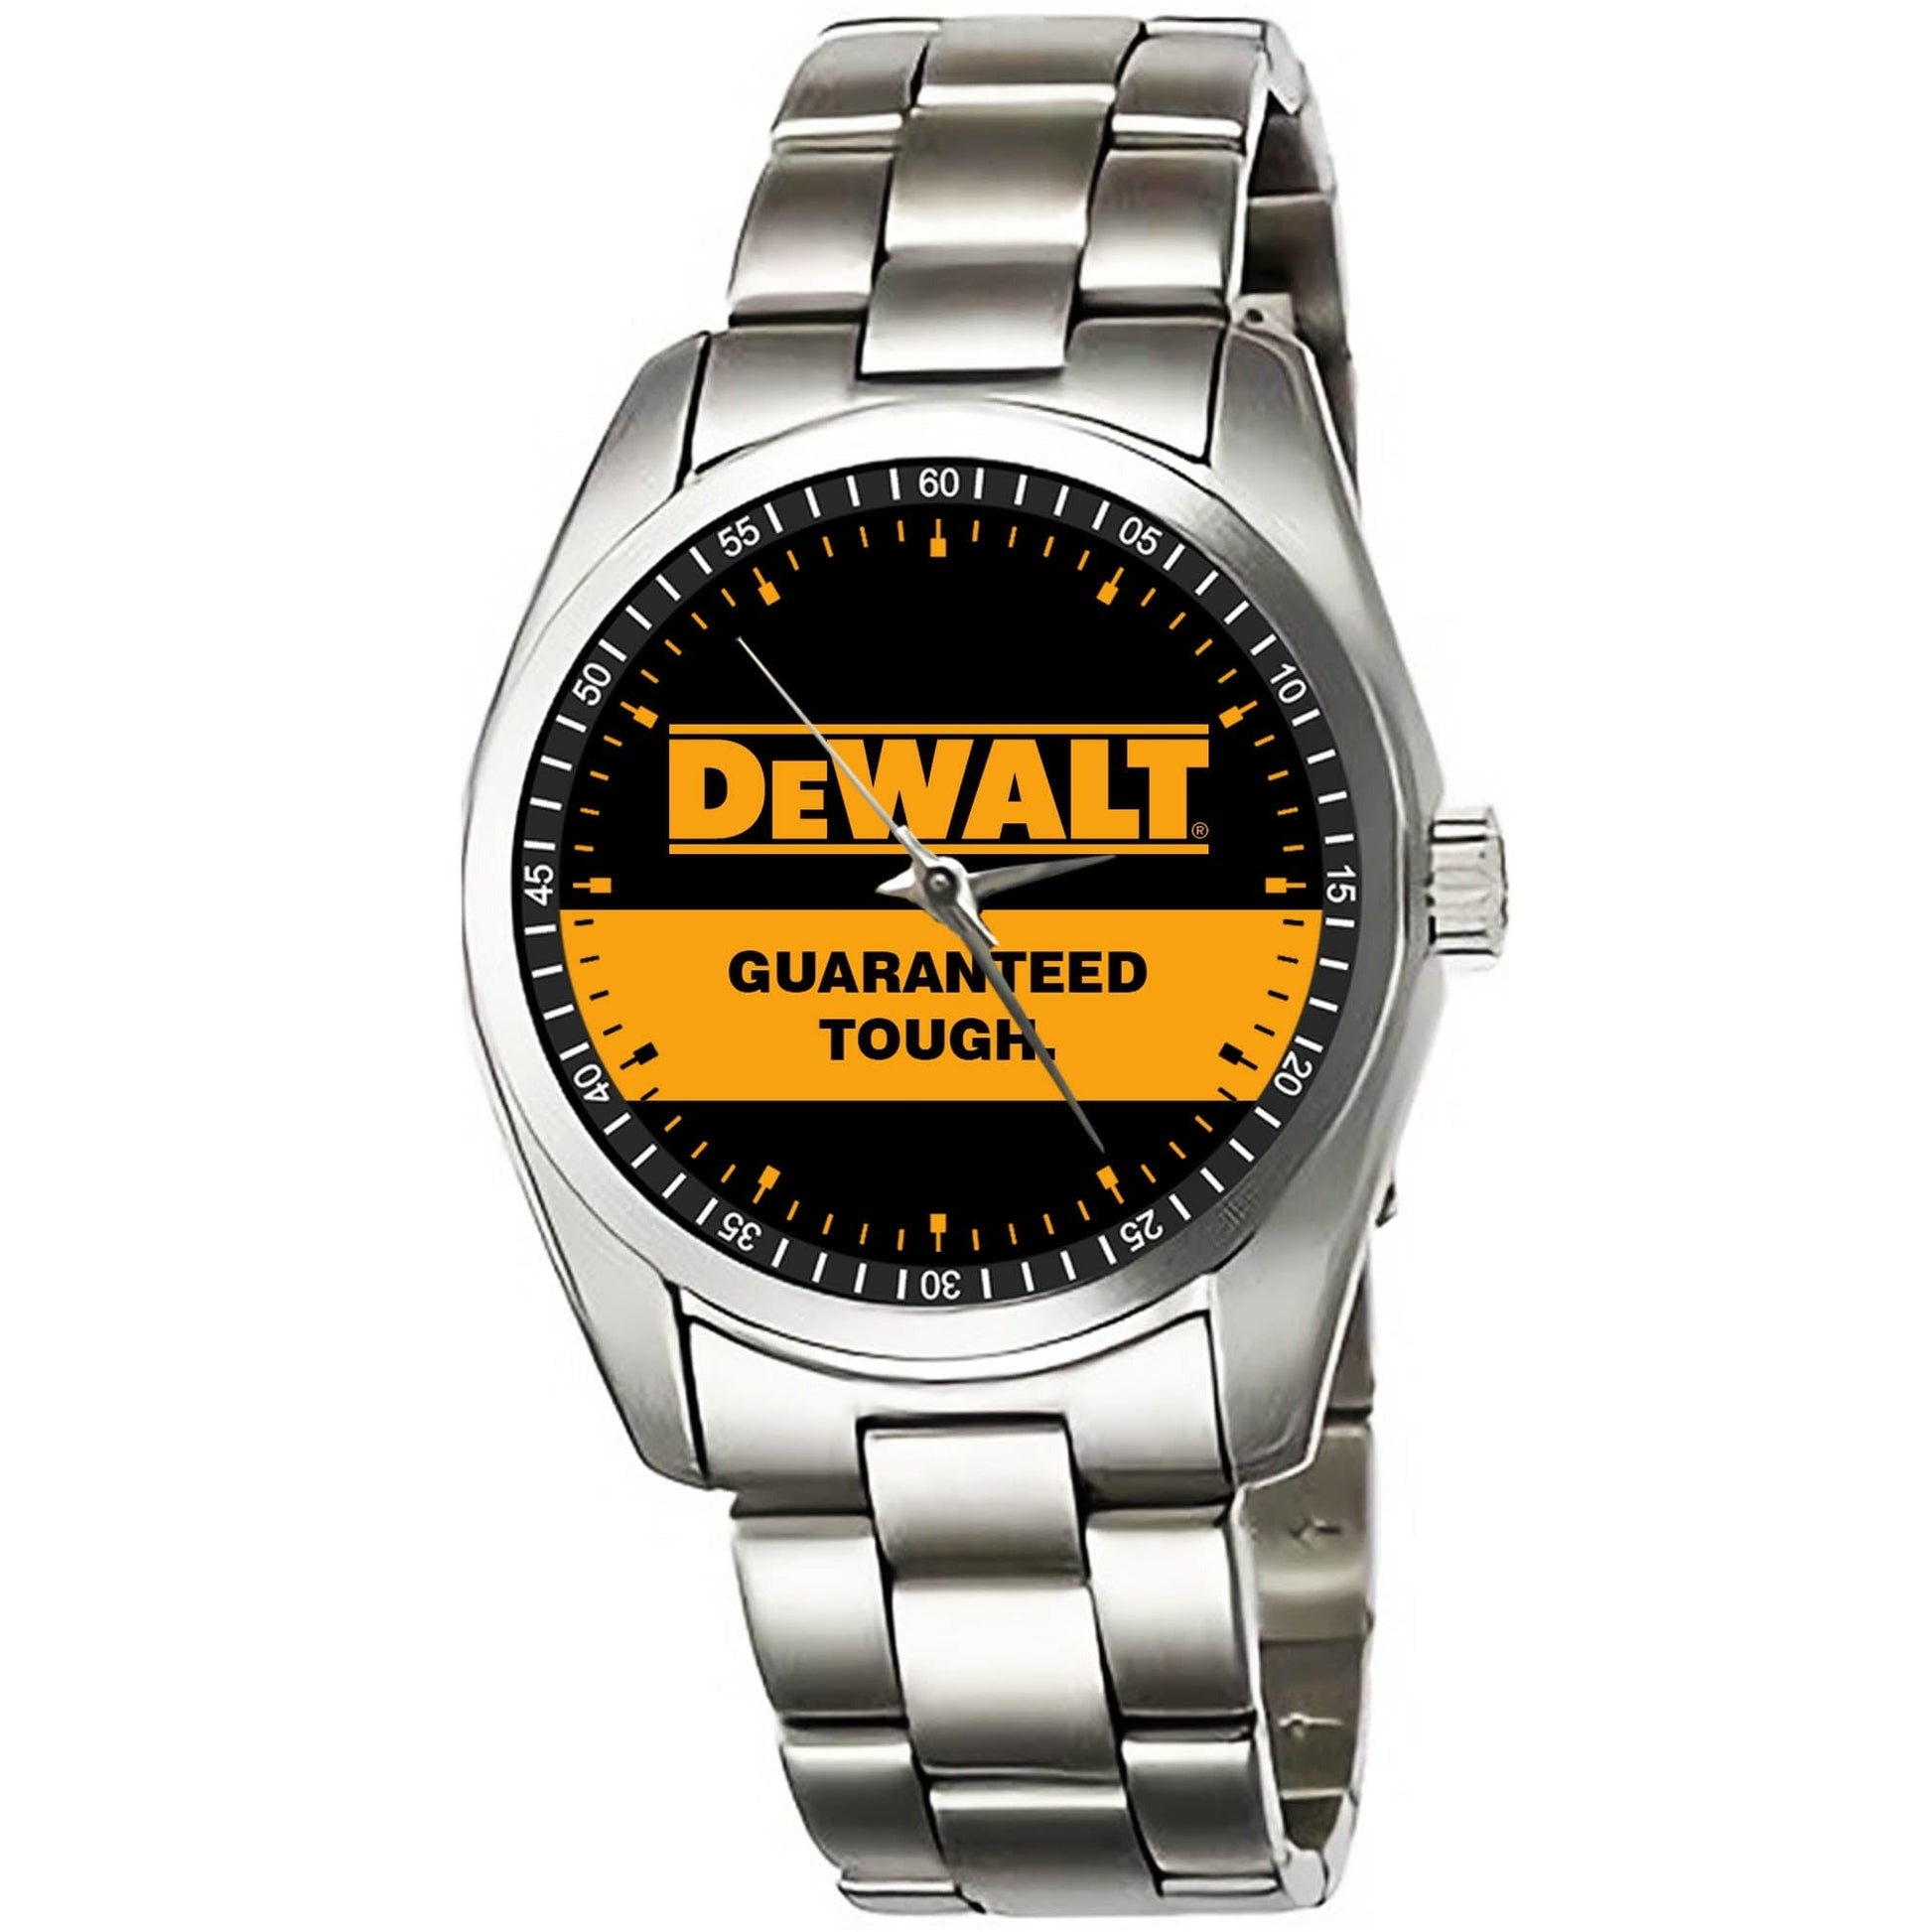 Dewalt Guaranteed Tough Watches KP549